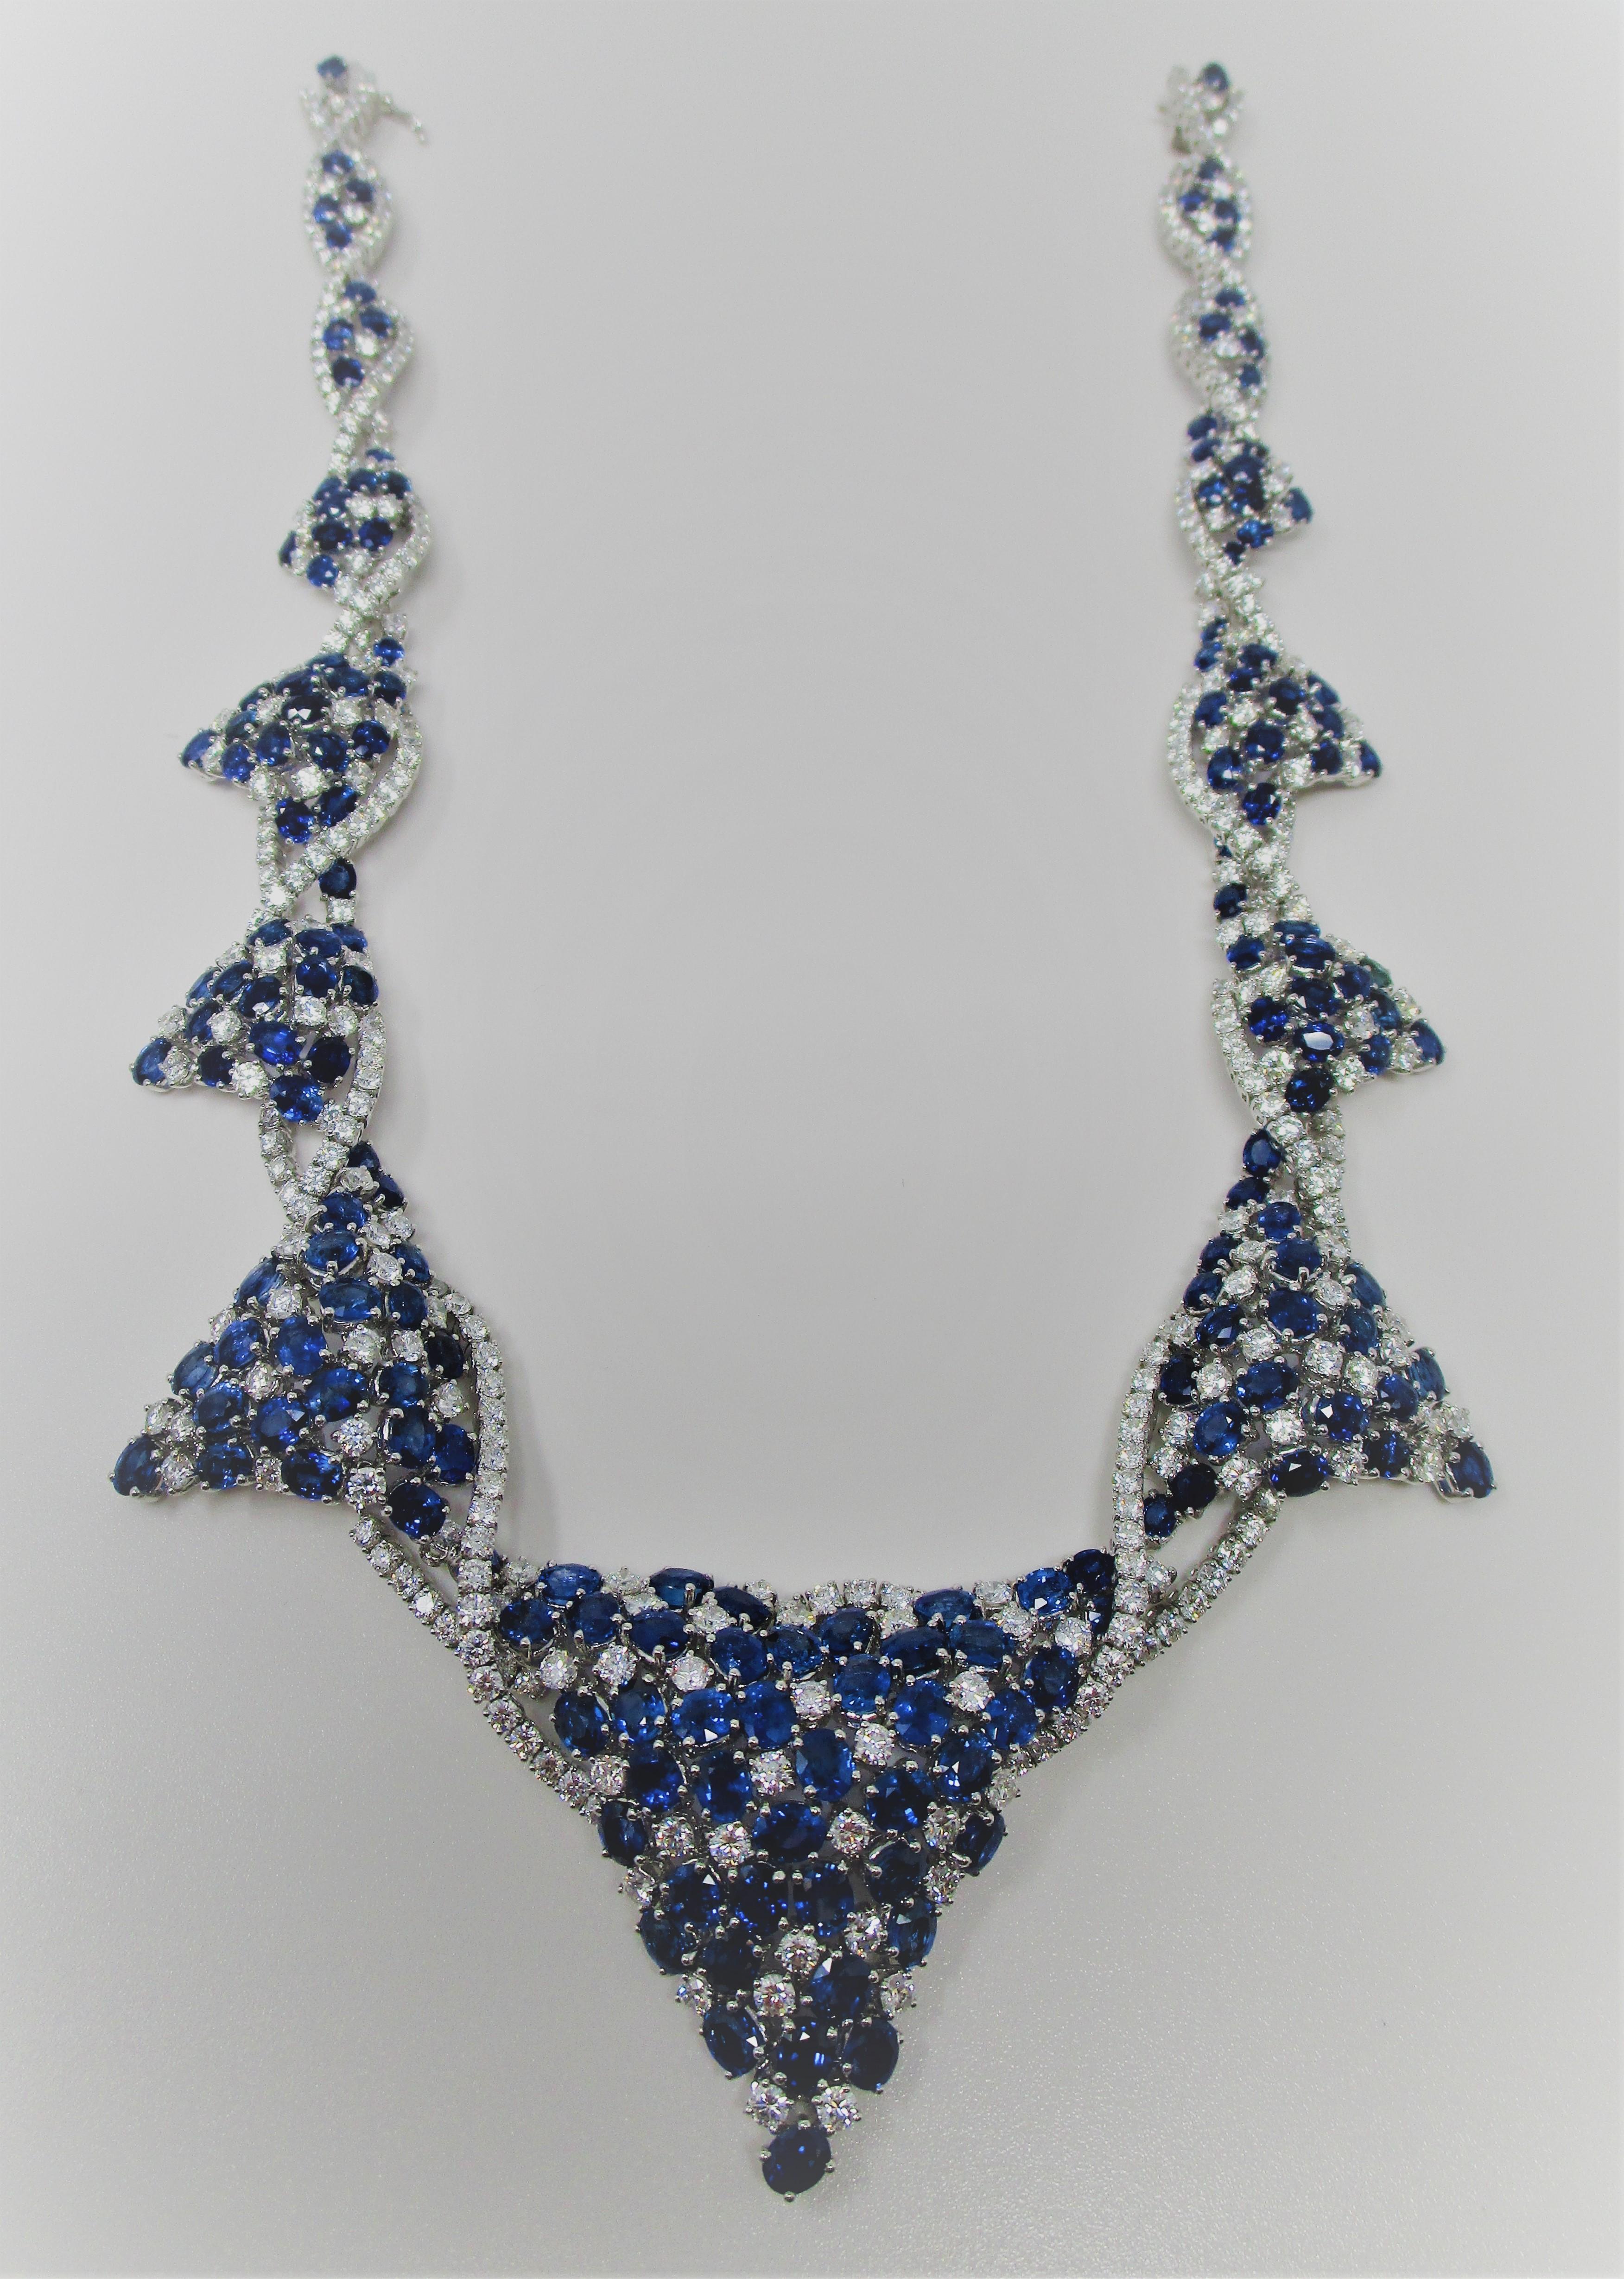 Yvel White Gold 28.48 Carat Diamond 69.65 Carat Blue Sapphire Necklace For Sale 2